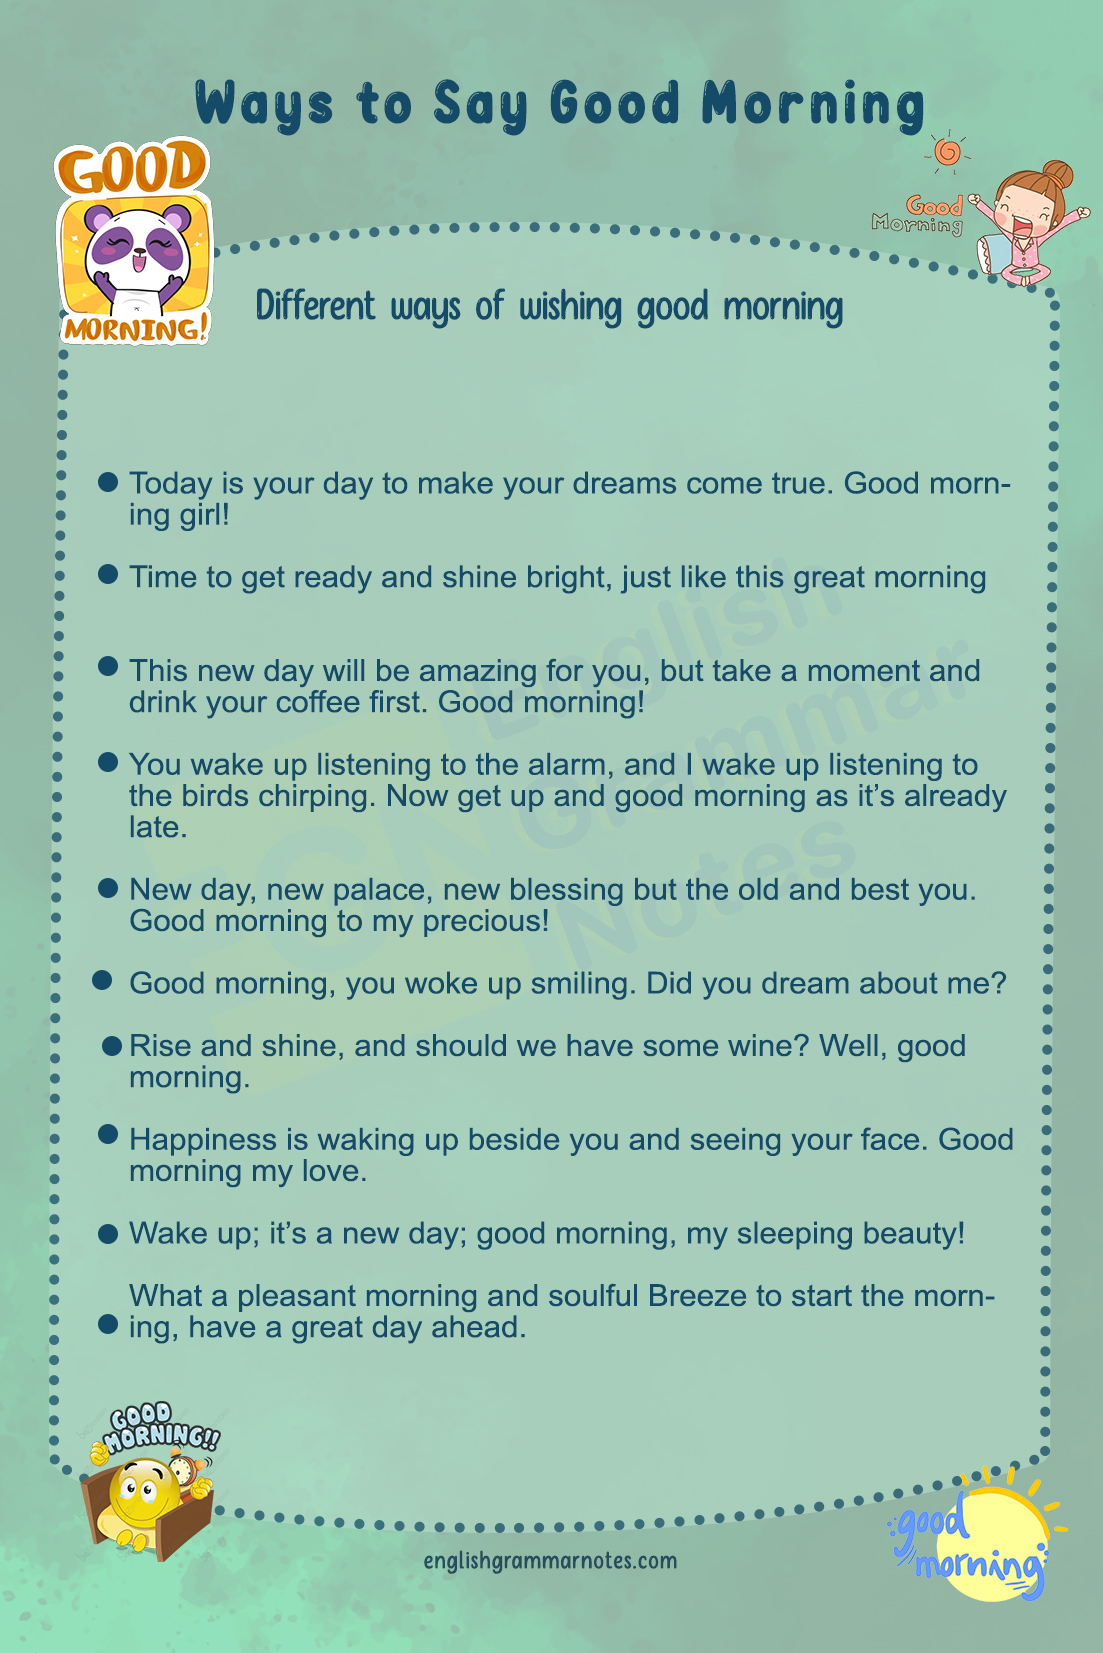 Ways to Say Good Morning 2